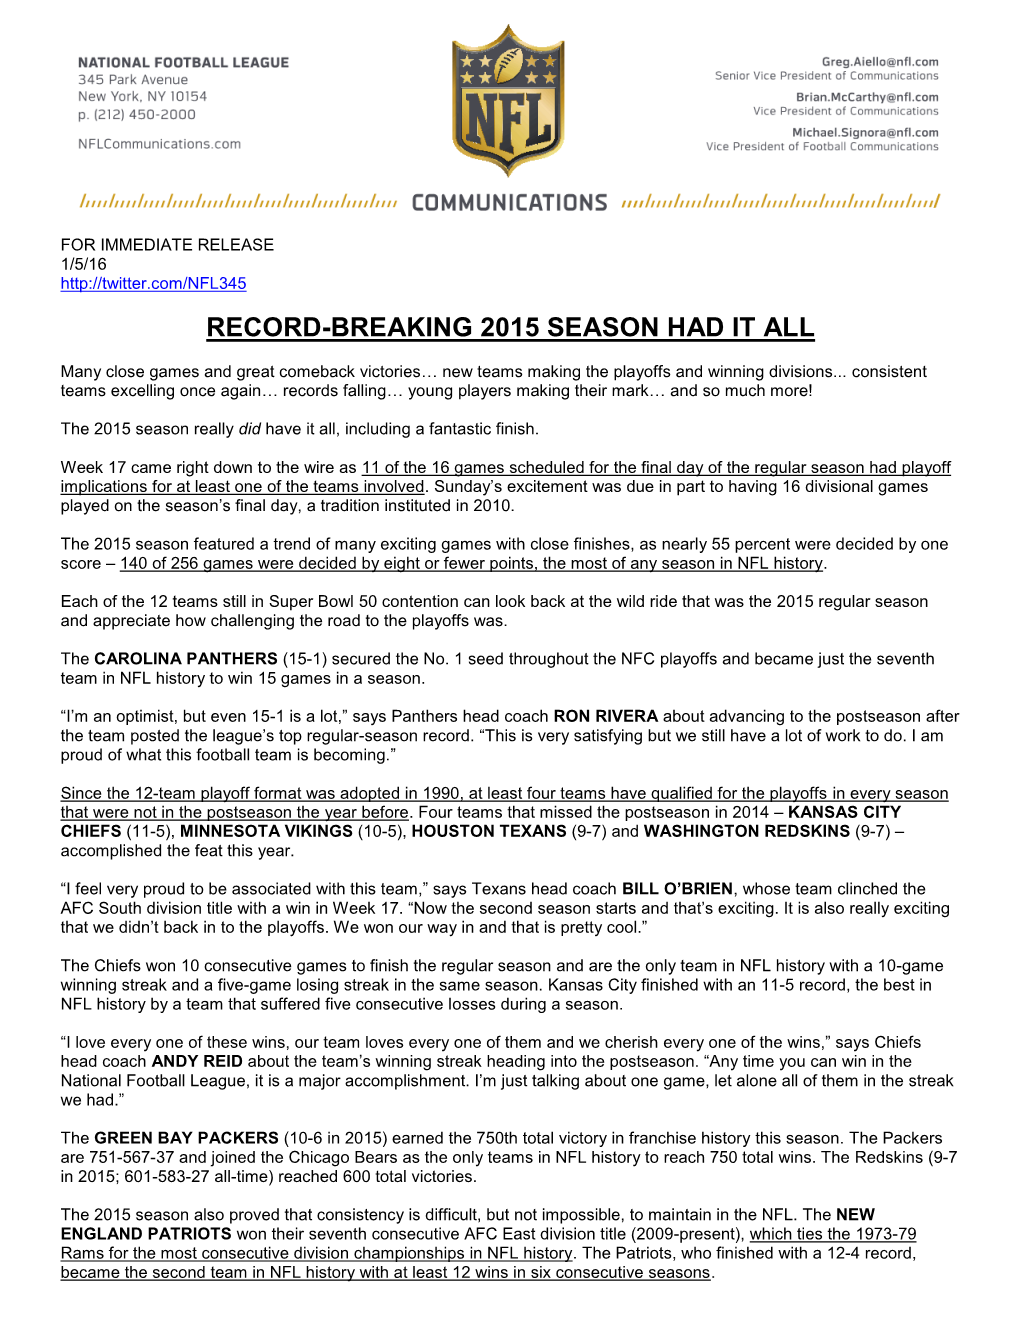 Record-Breaking 2015 Season Had It All